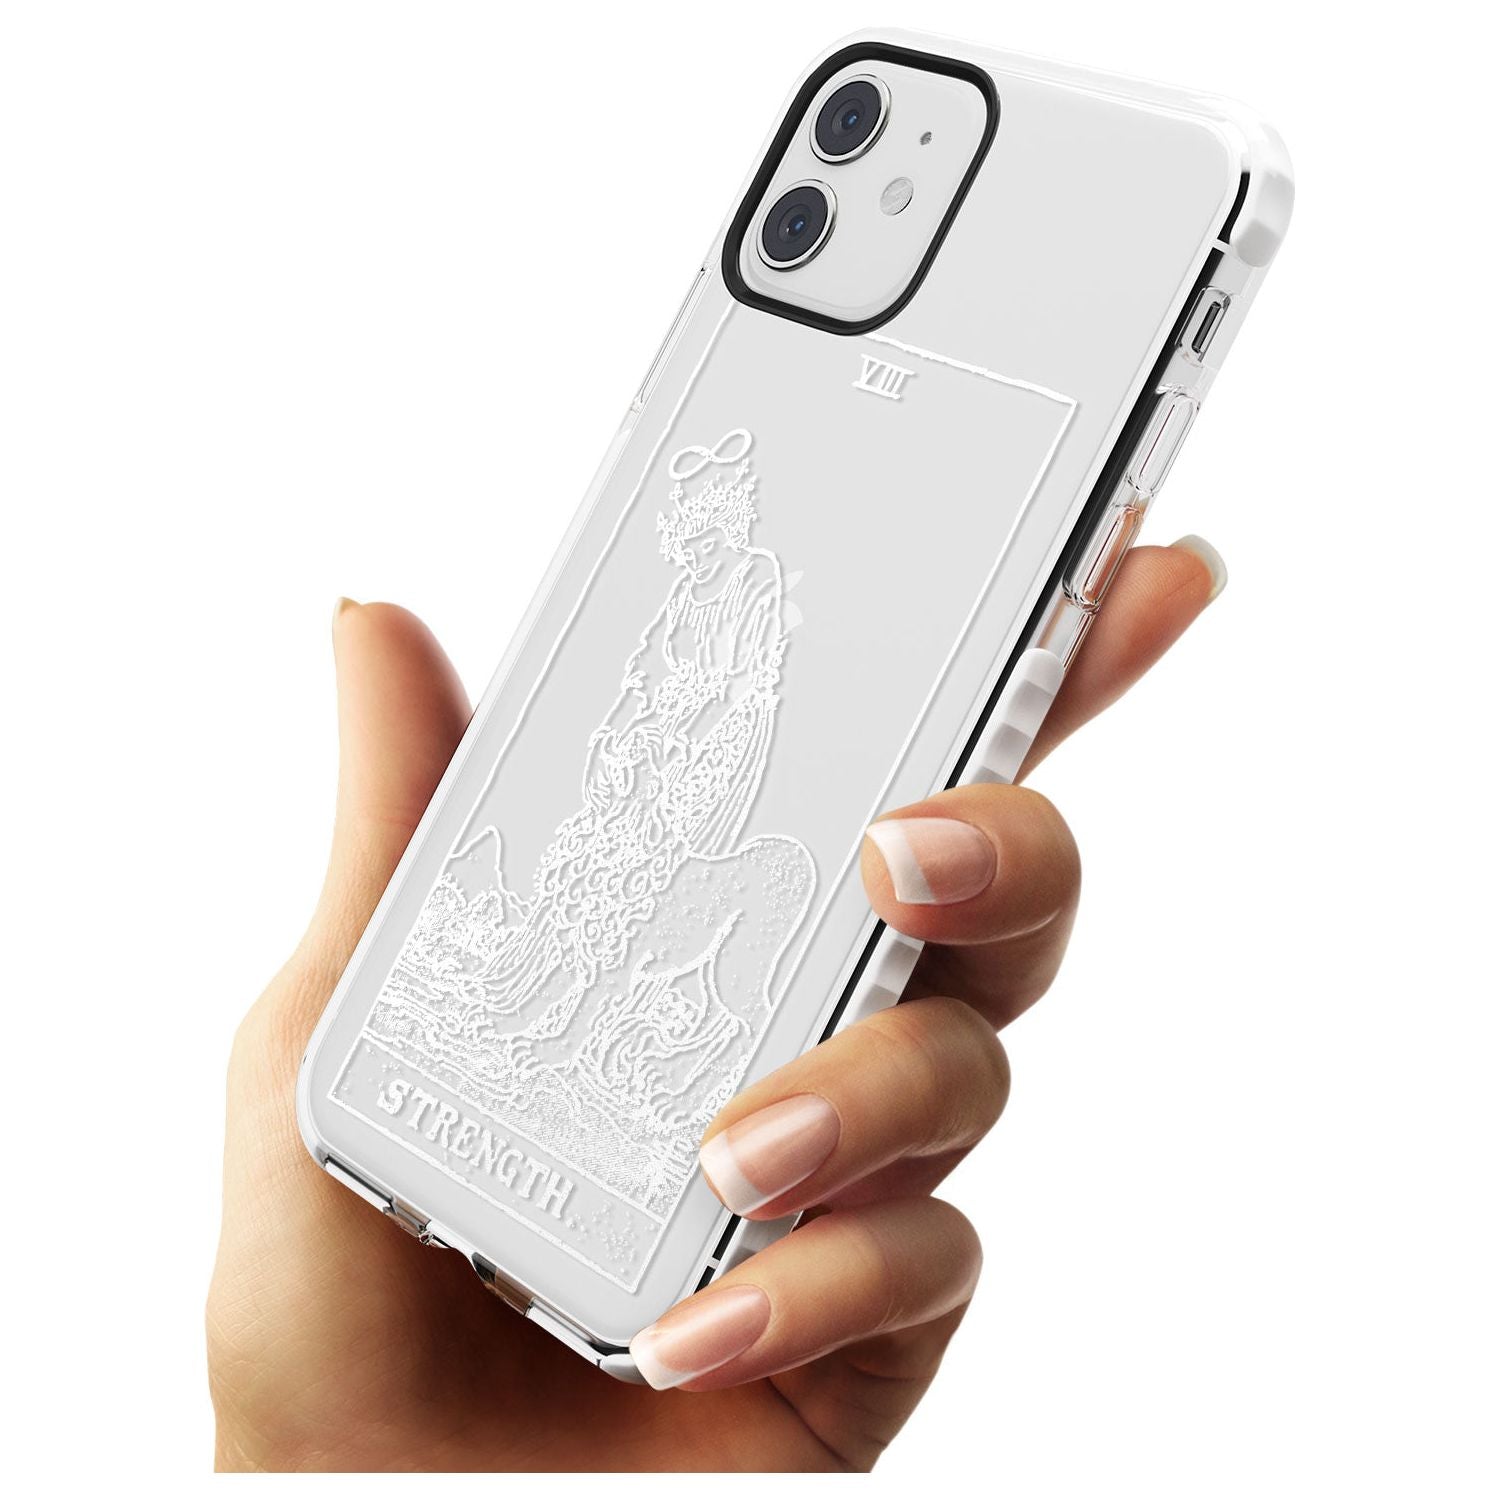 Strength Tarot Card - White Transparent Slim TPU Phone Case for iPhone 11